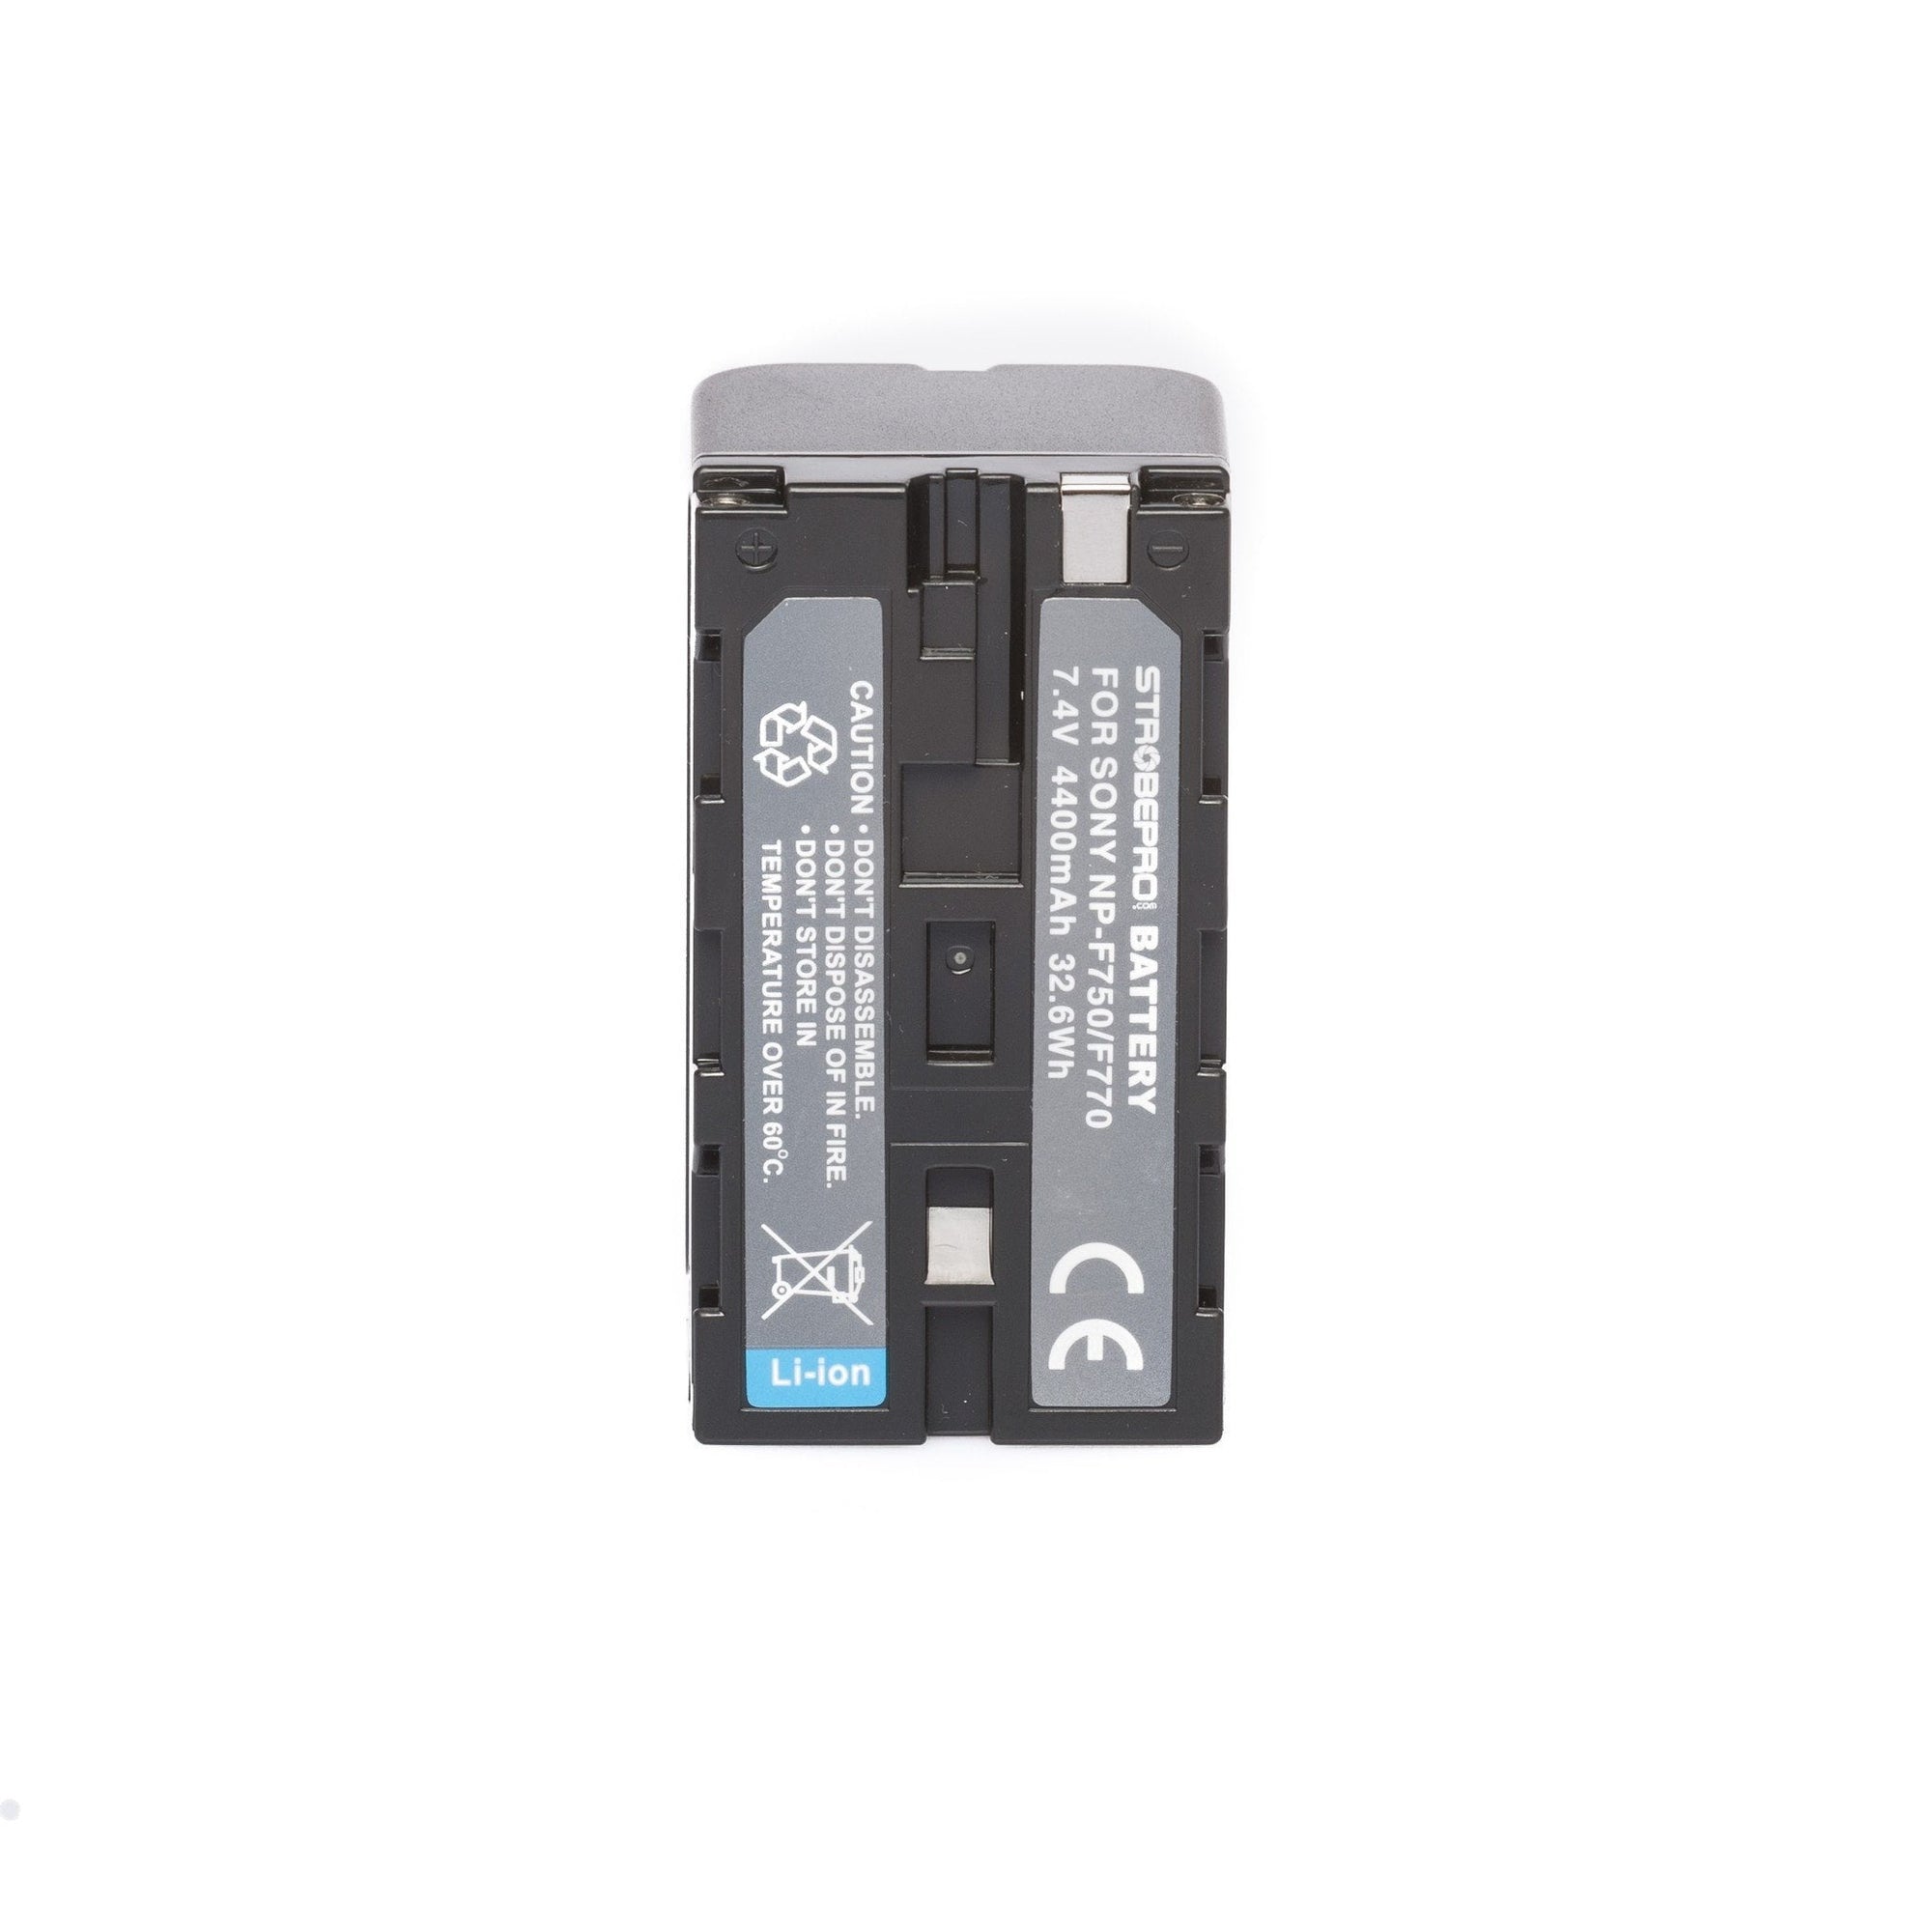 Strobepro Sony Compatible NP-F750 Battery - Strobepro Studio Lighting